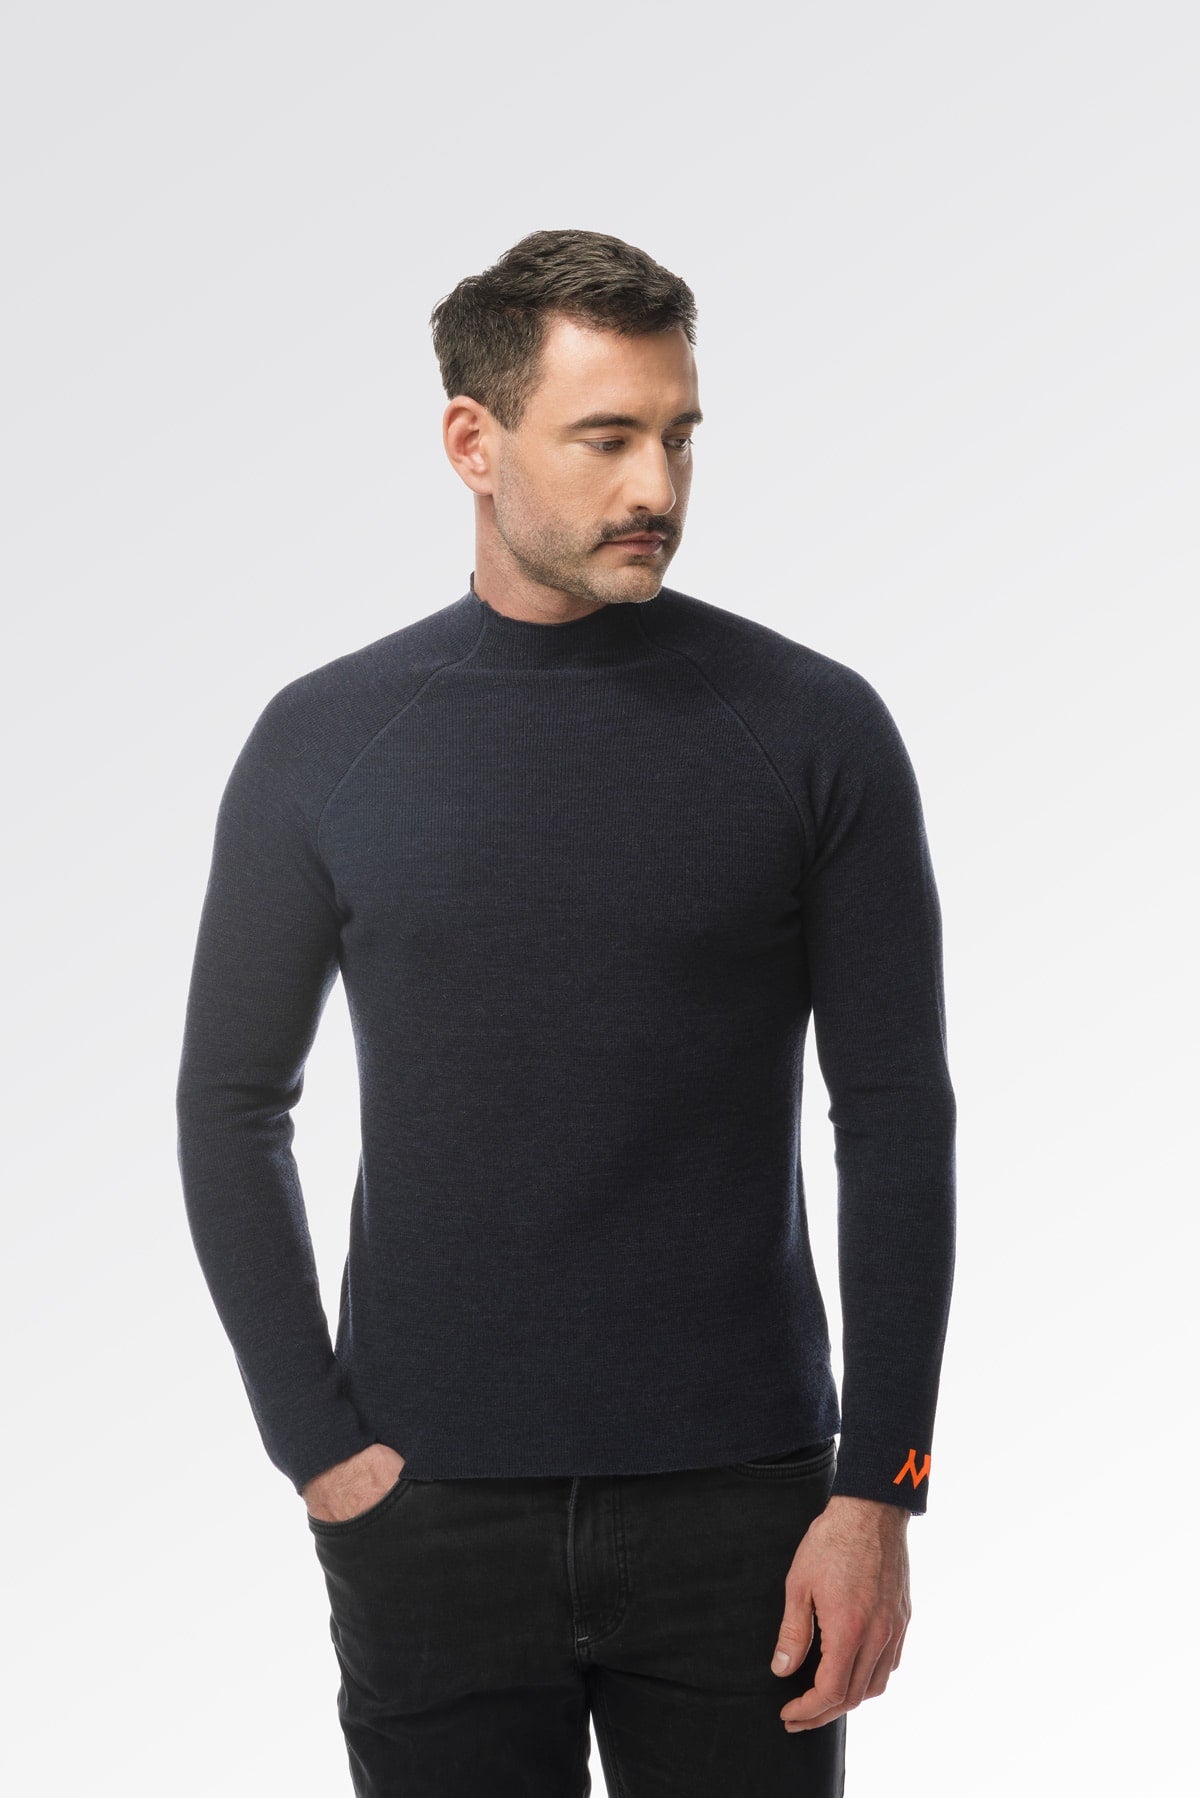 Pulloverpullover – Herren, Herbst/Winter – 100 % Wolle – 100 % Made in Italy | Brunella Gori